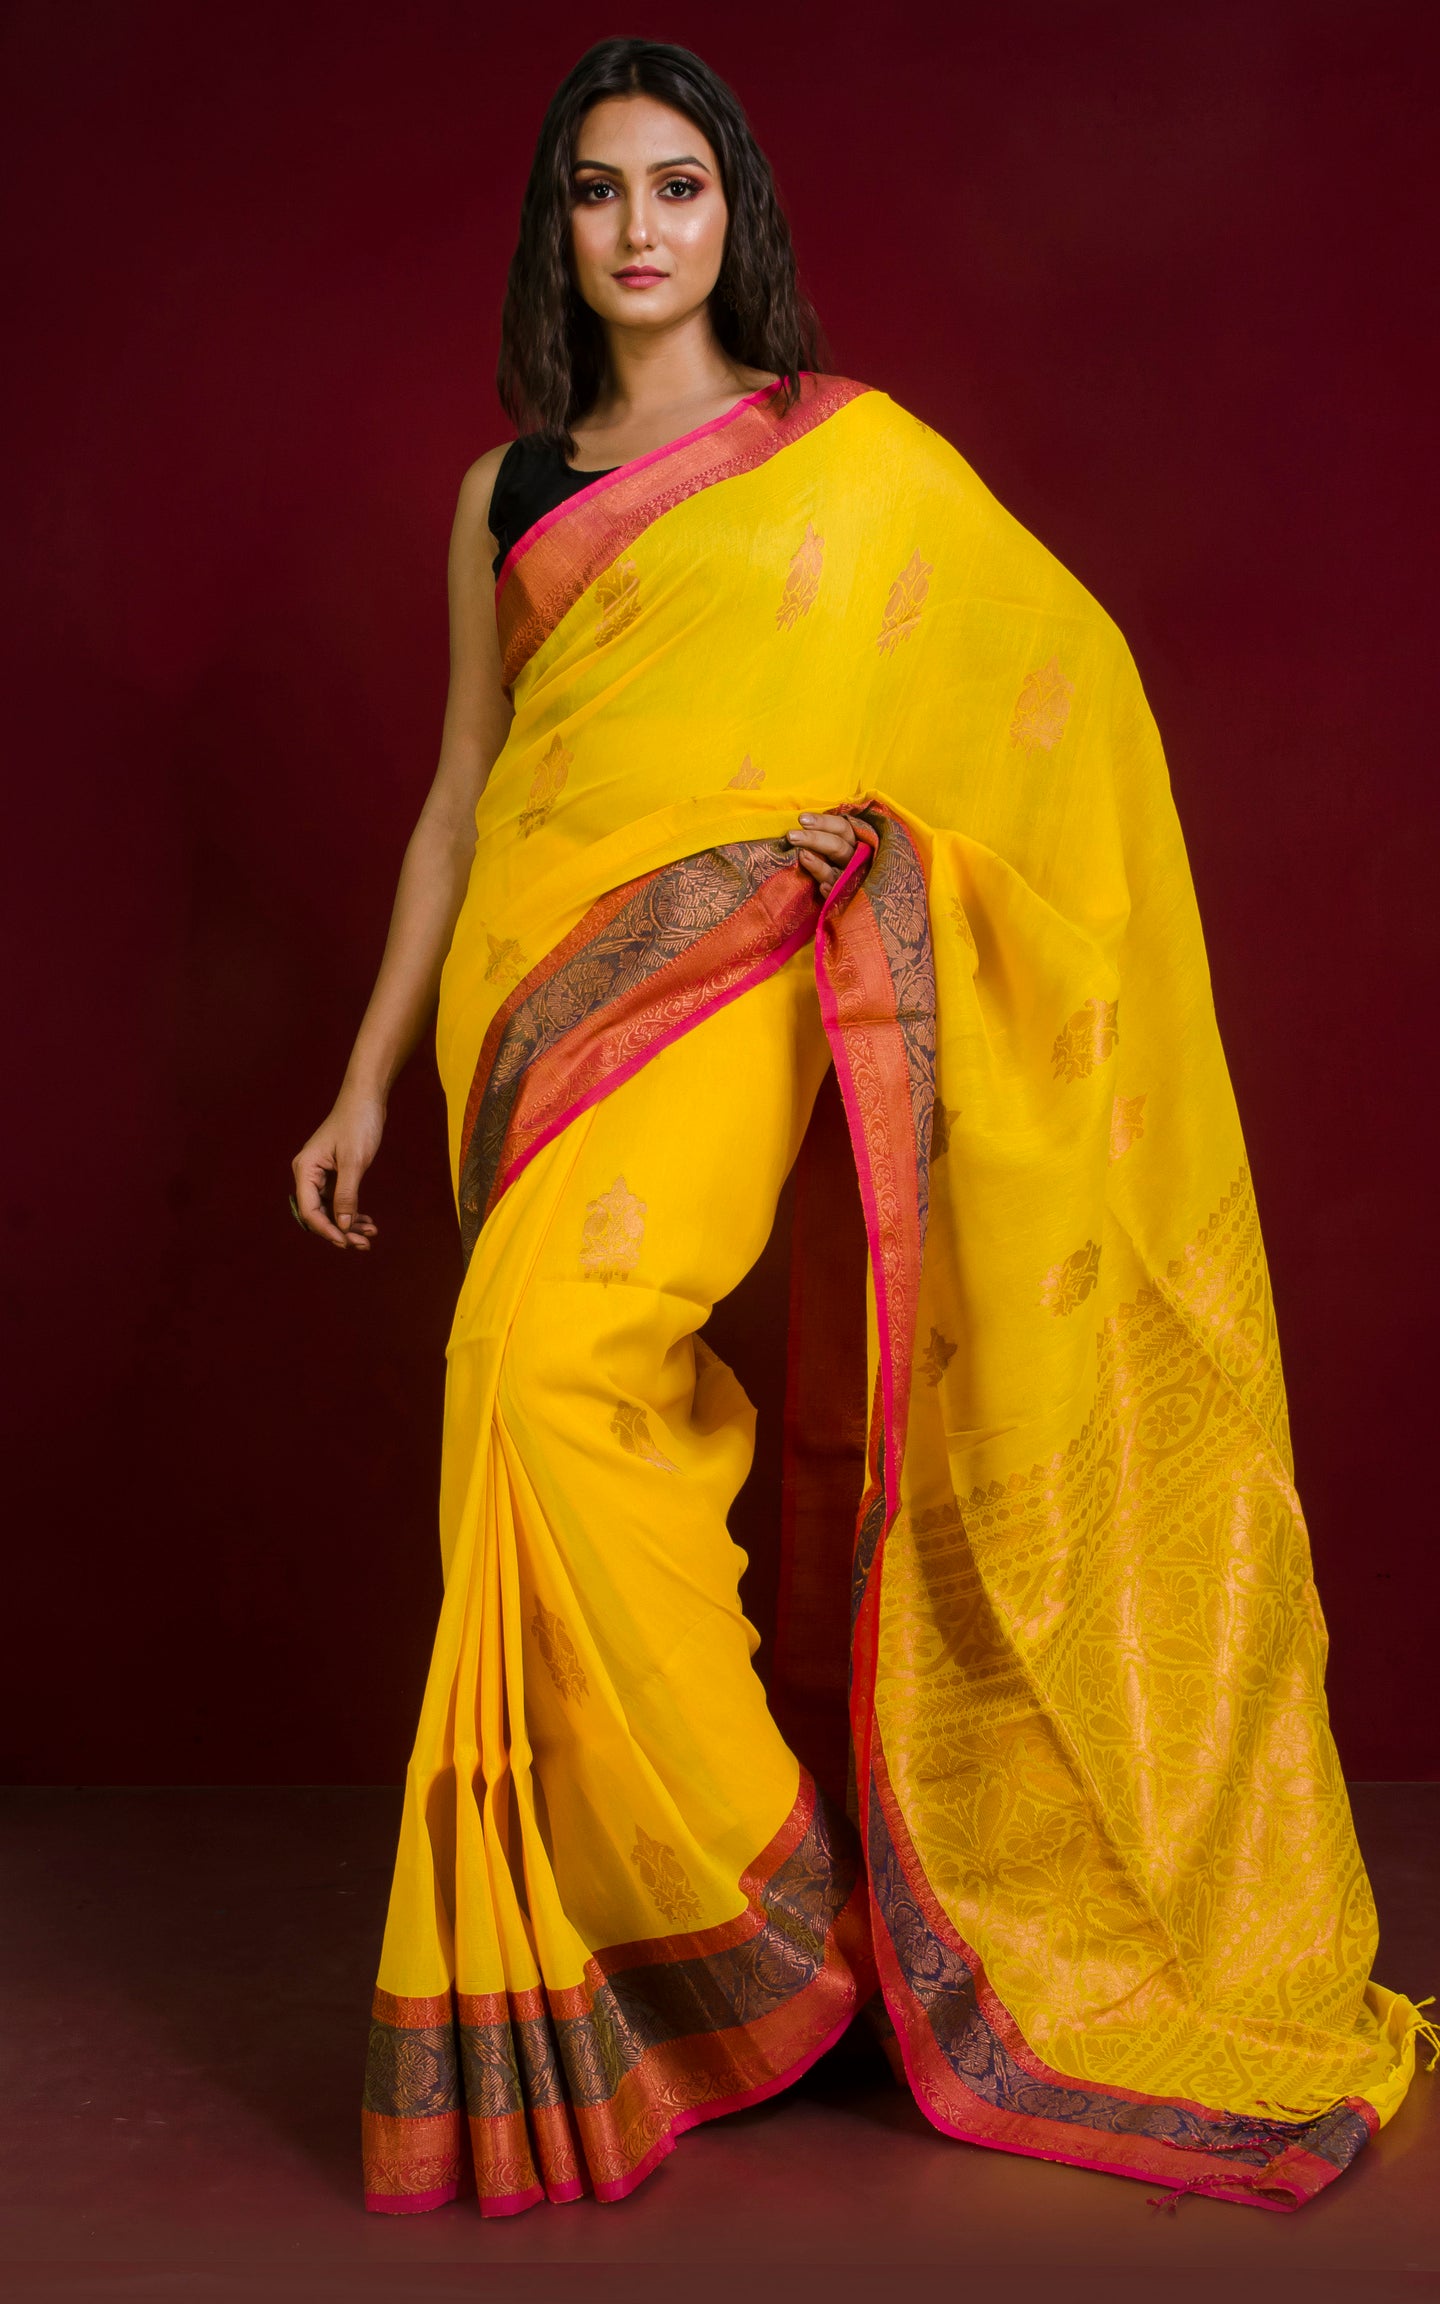 Handwoven Skirt Nakshi Border Cotton Linen Banarasi Saree in Golden Yellow and Multicolored